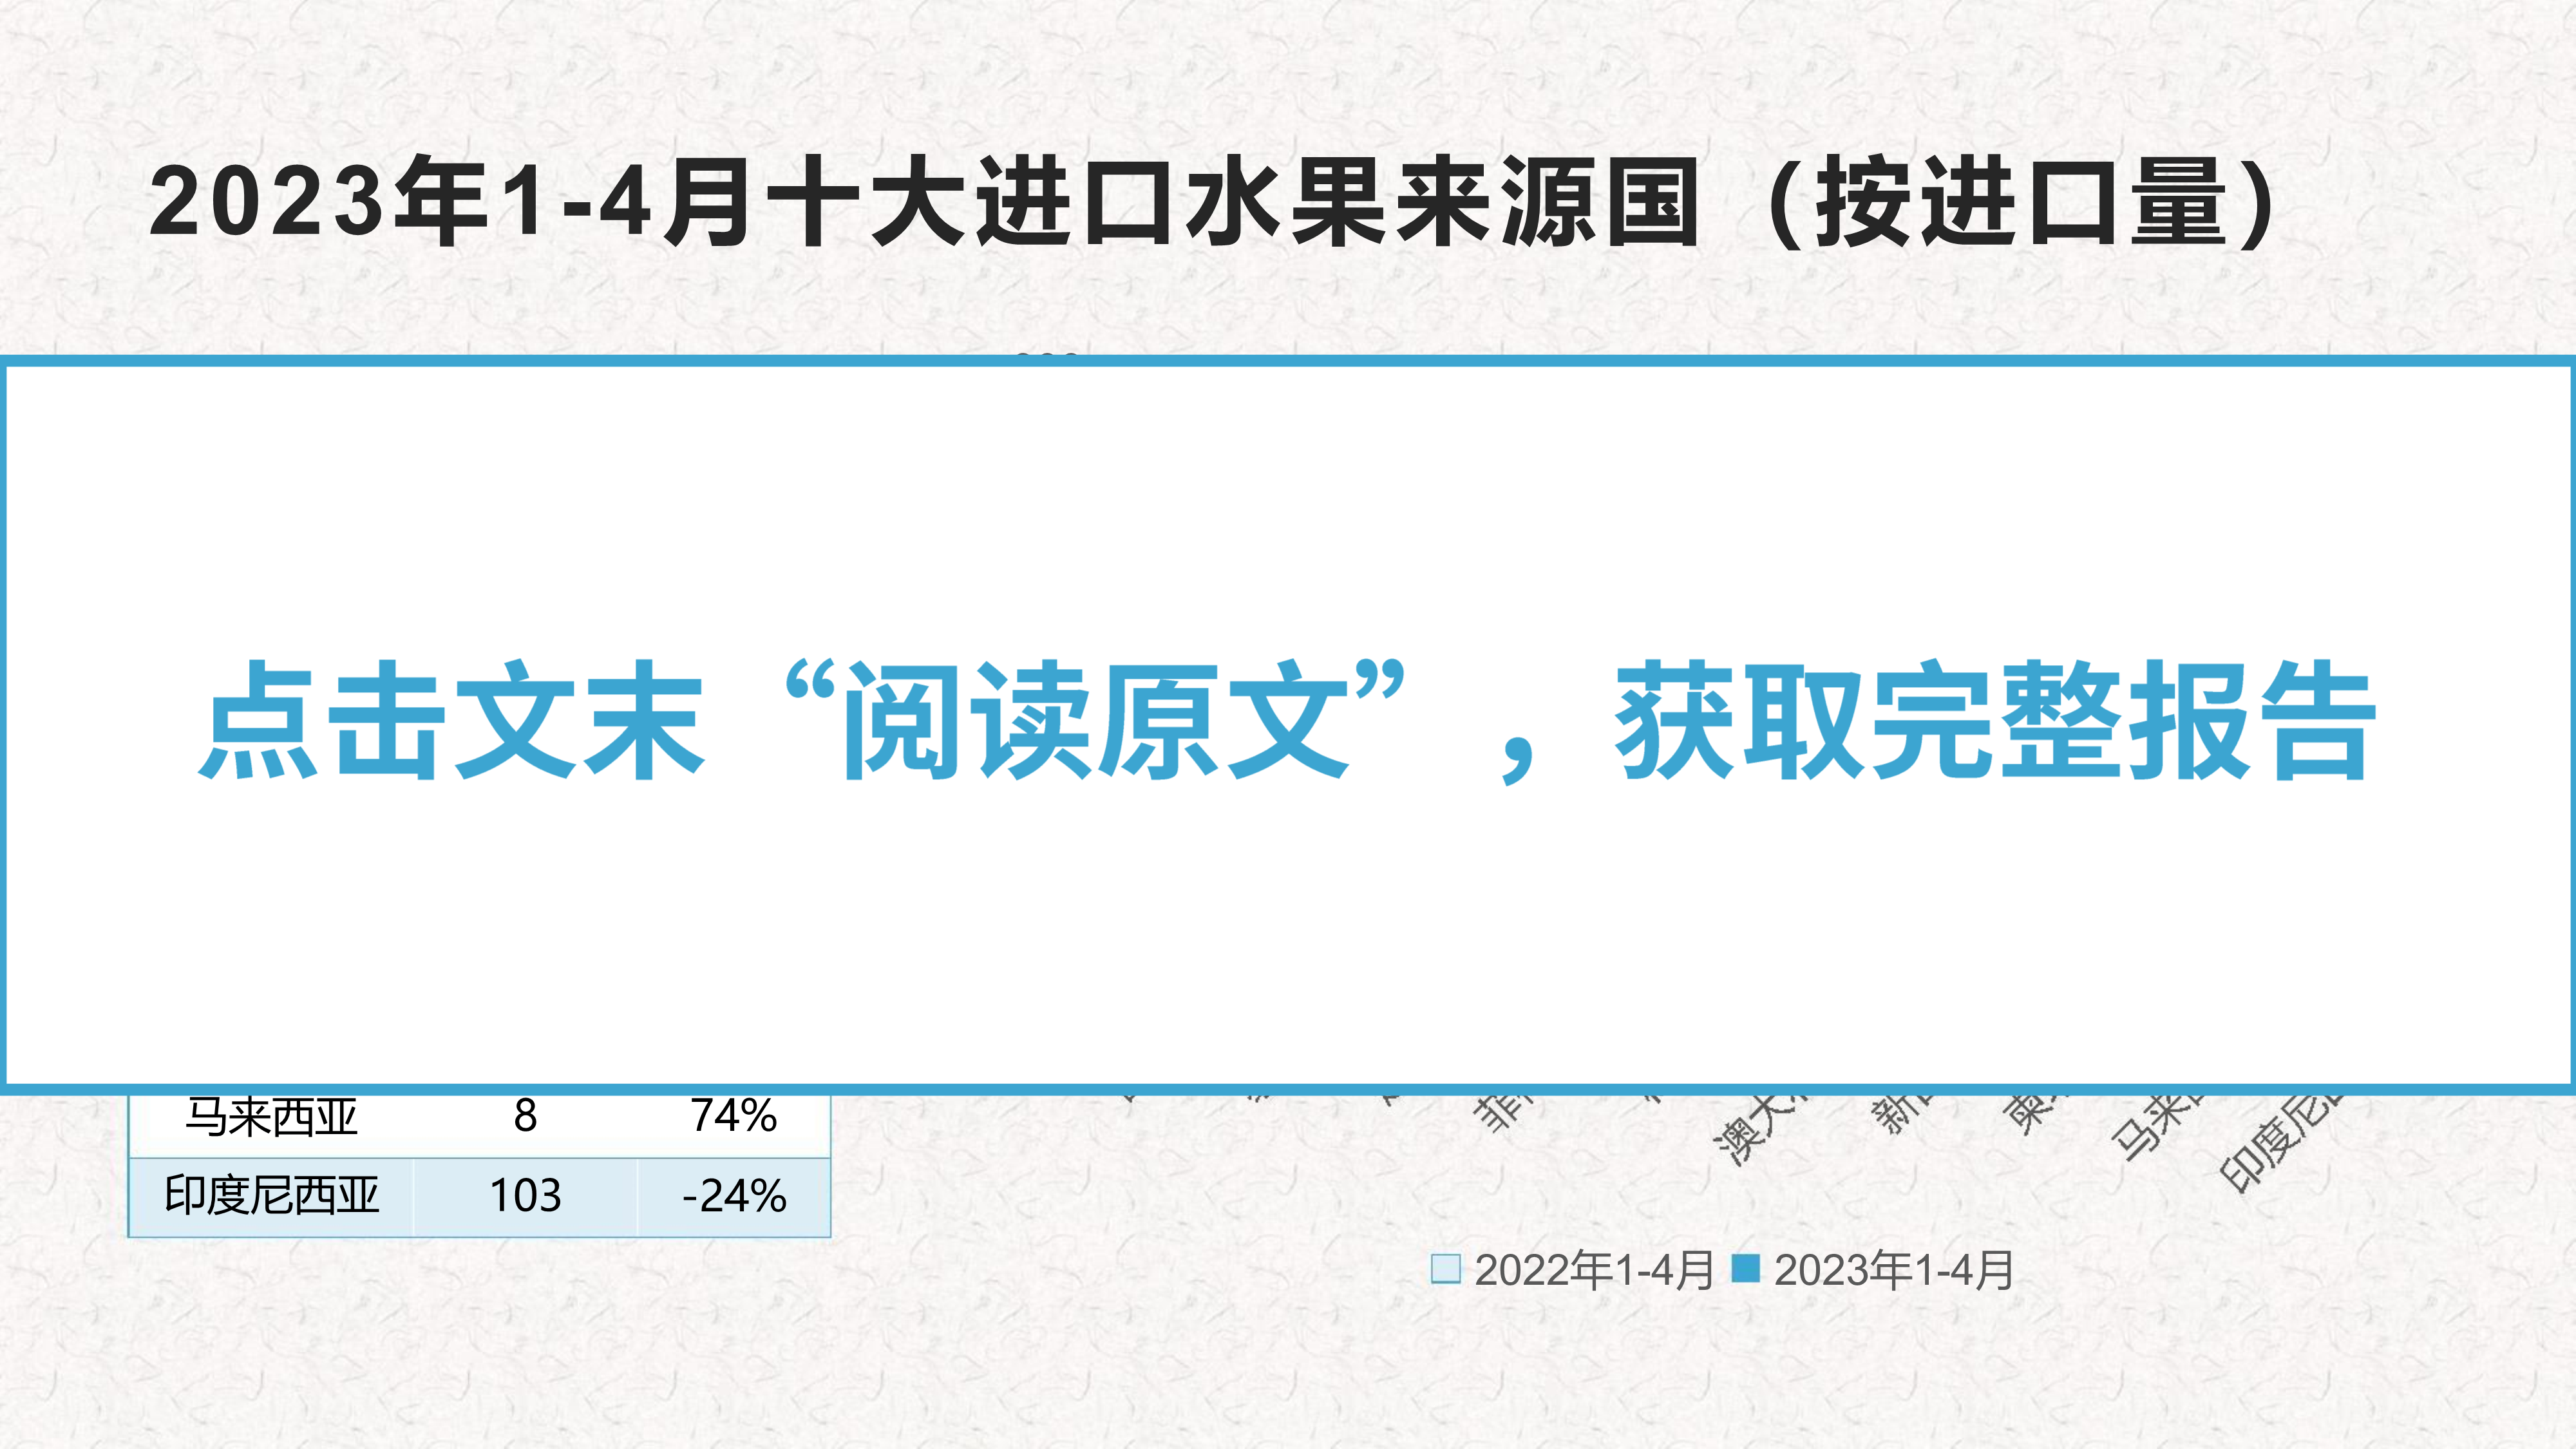 2023年1-4月进口水果报告image5_out.png